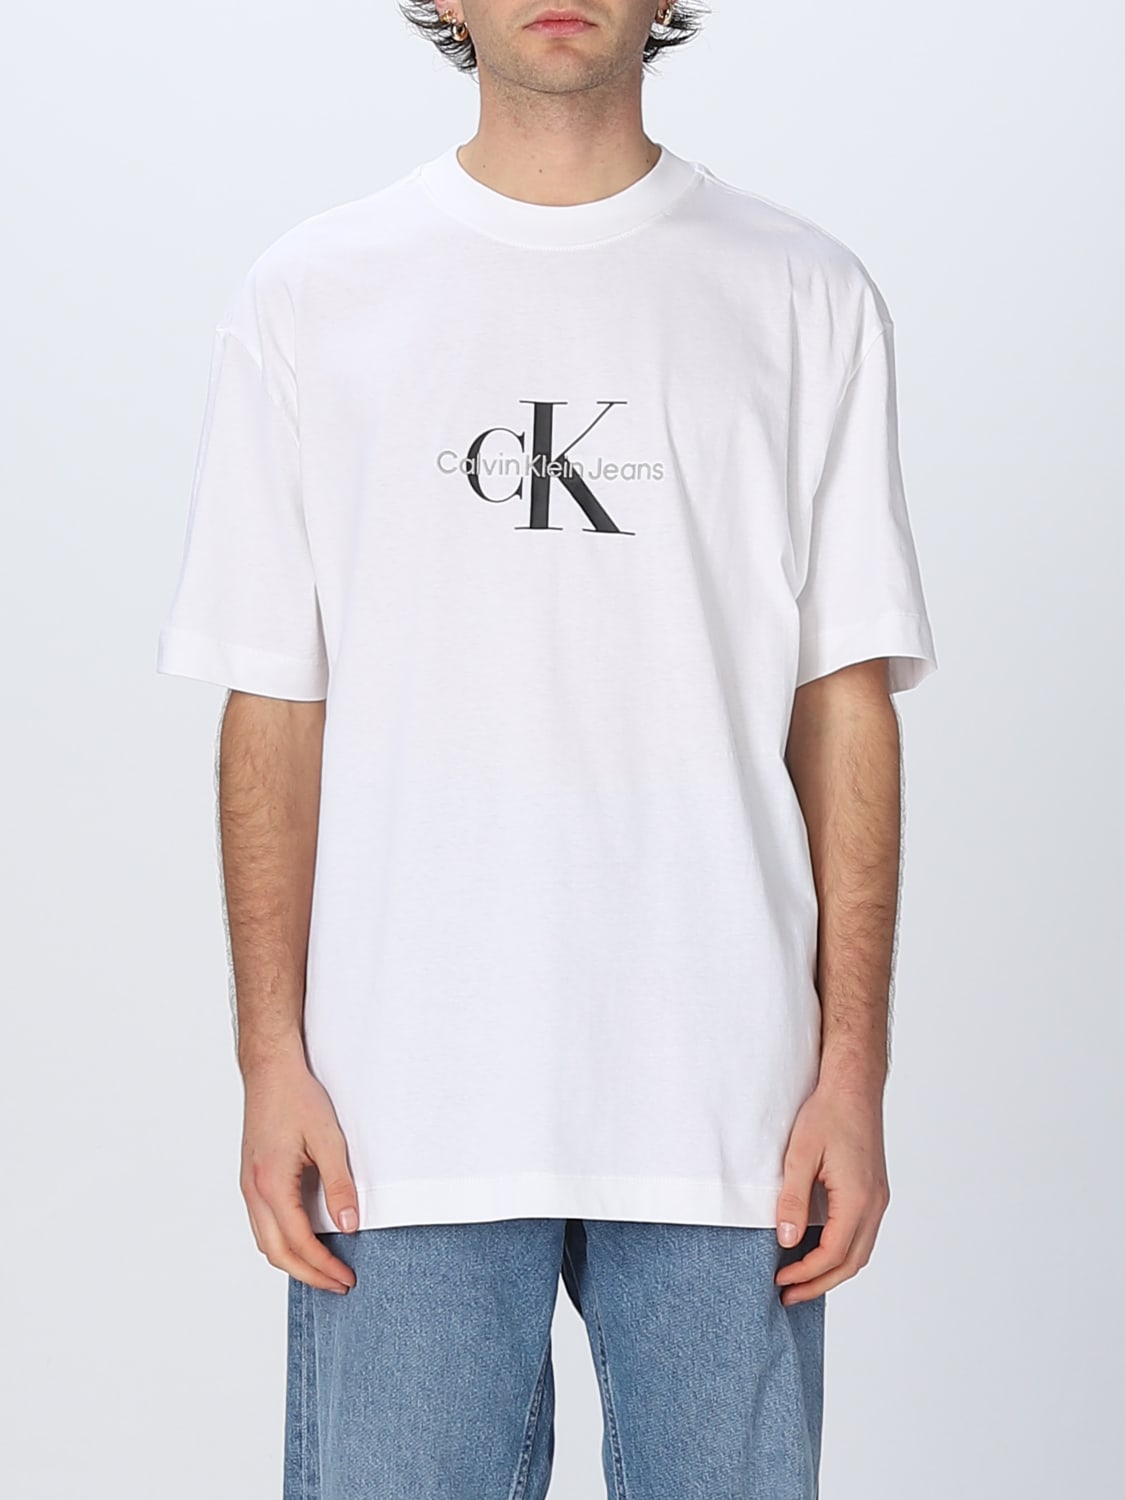 CALVIN KLEIN JEANS: T-shirt men - White  CALVIN KLEIN JEANS t-shirt  J30J323307 online at